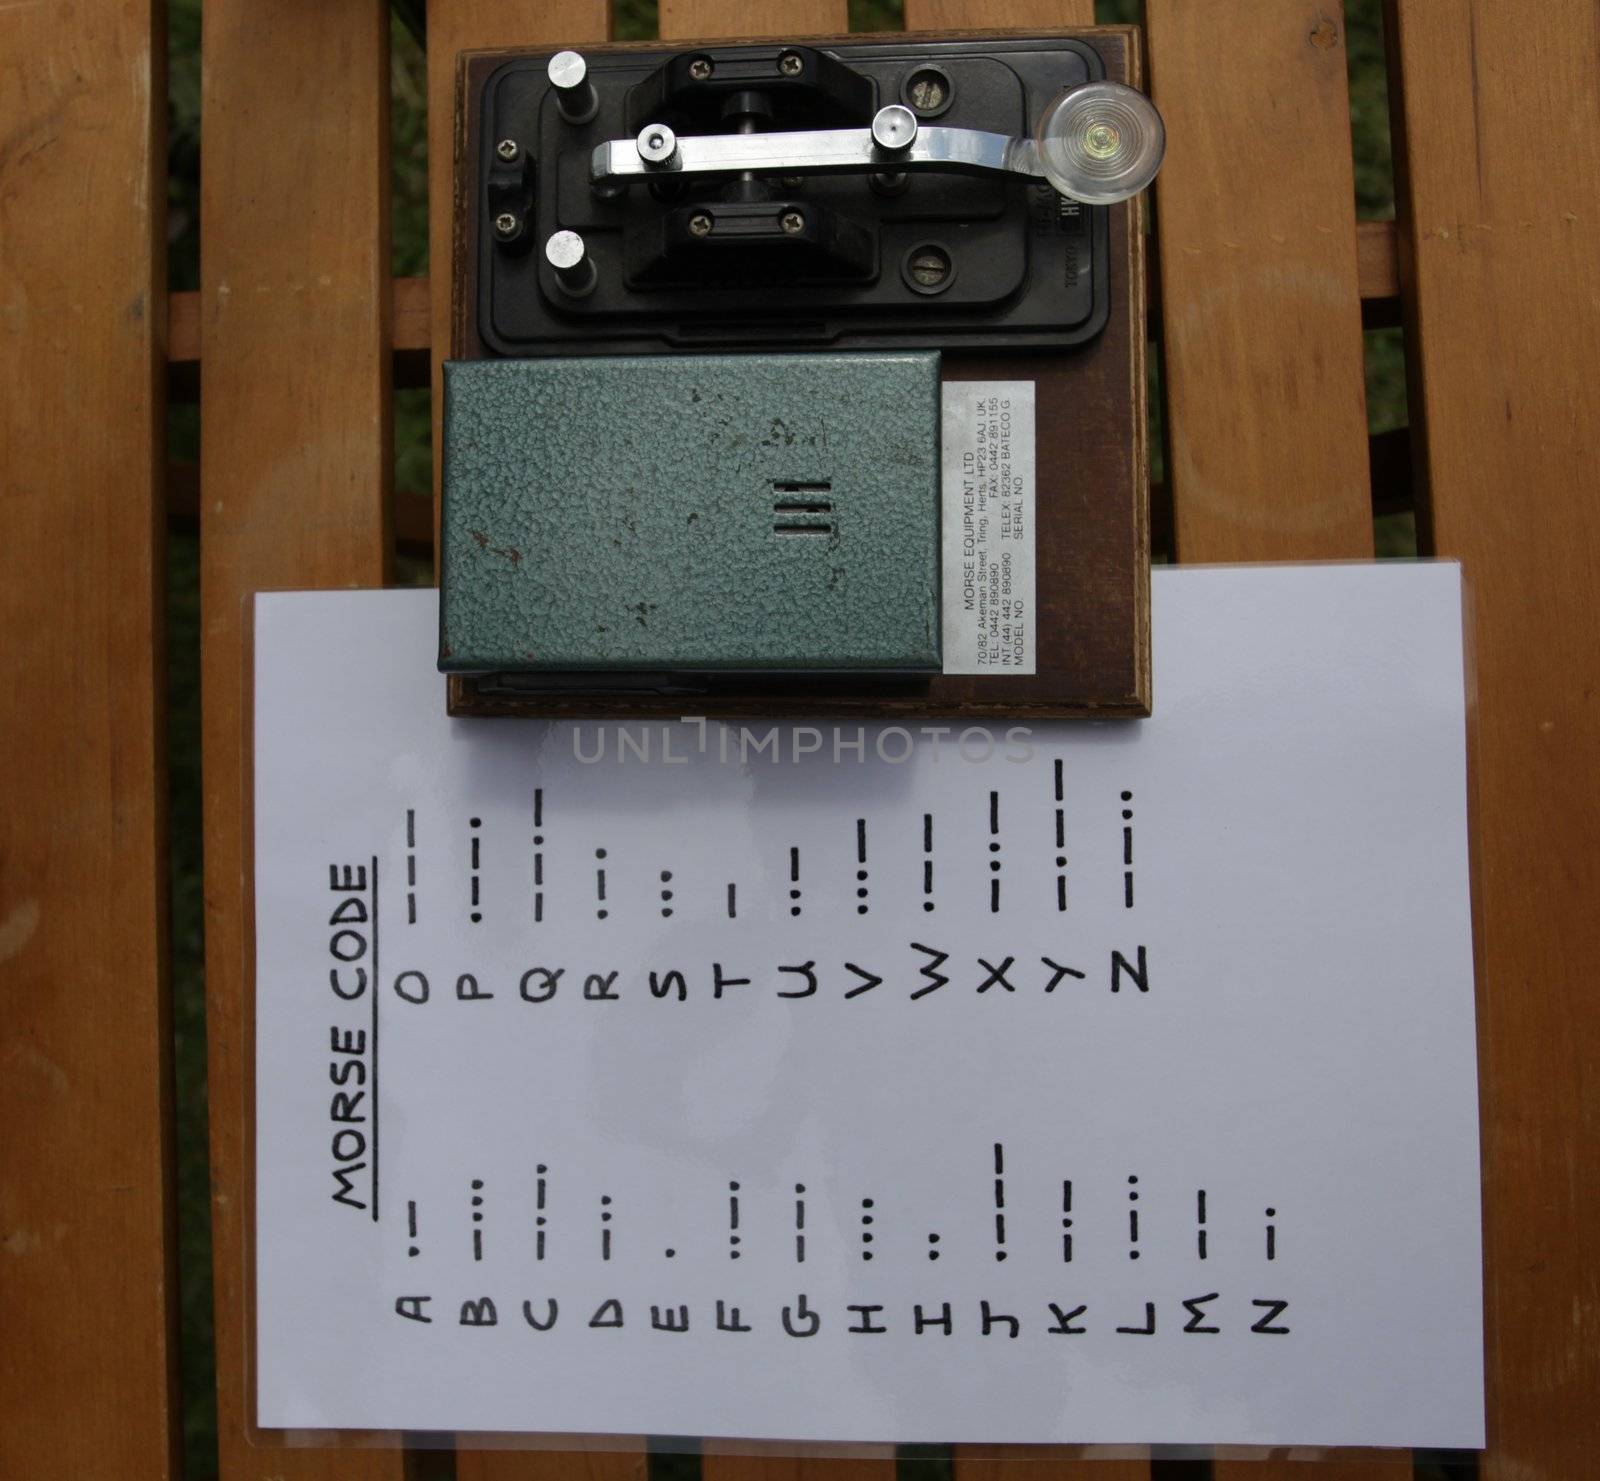 Morse code transmitter by olliemt